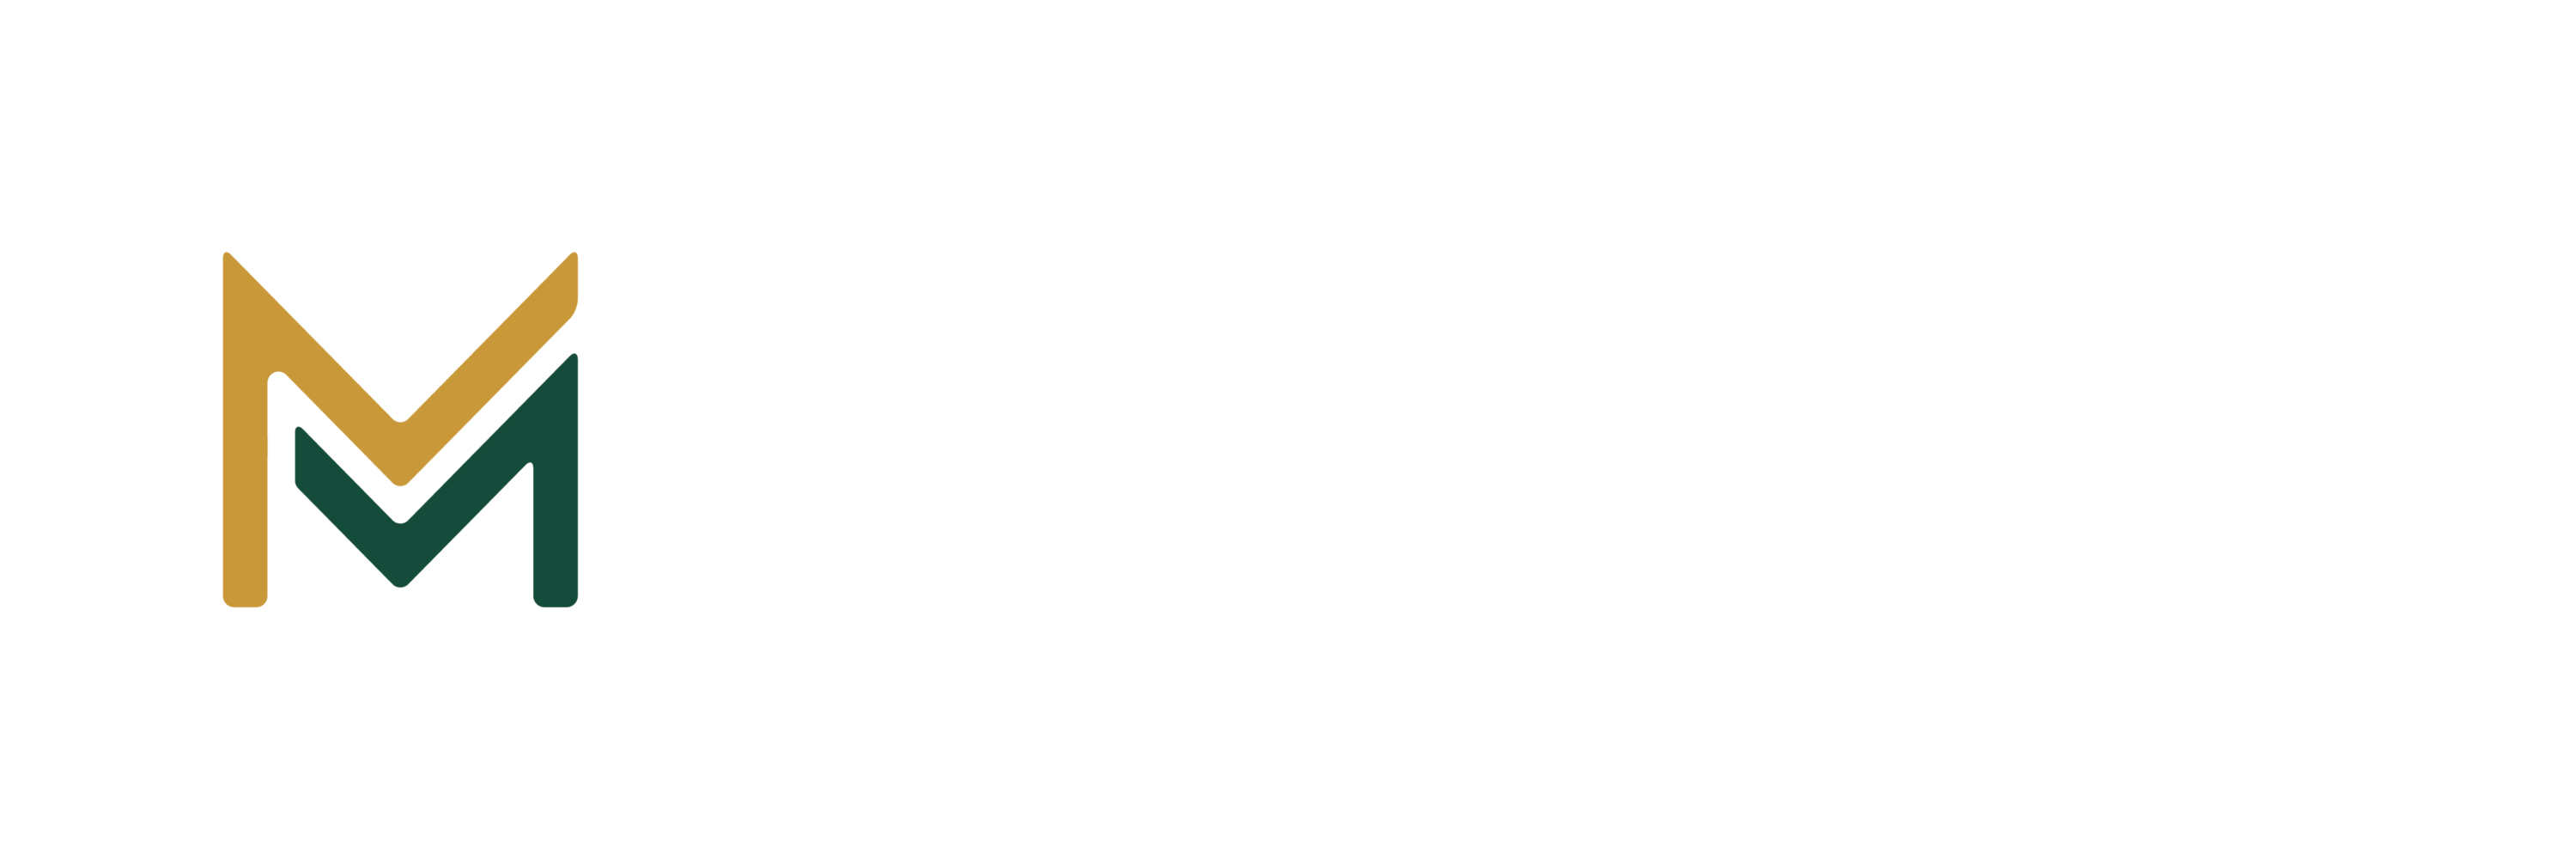 The Marshall Birmingham